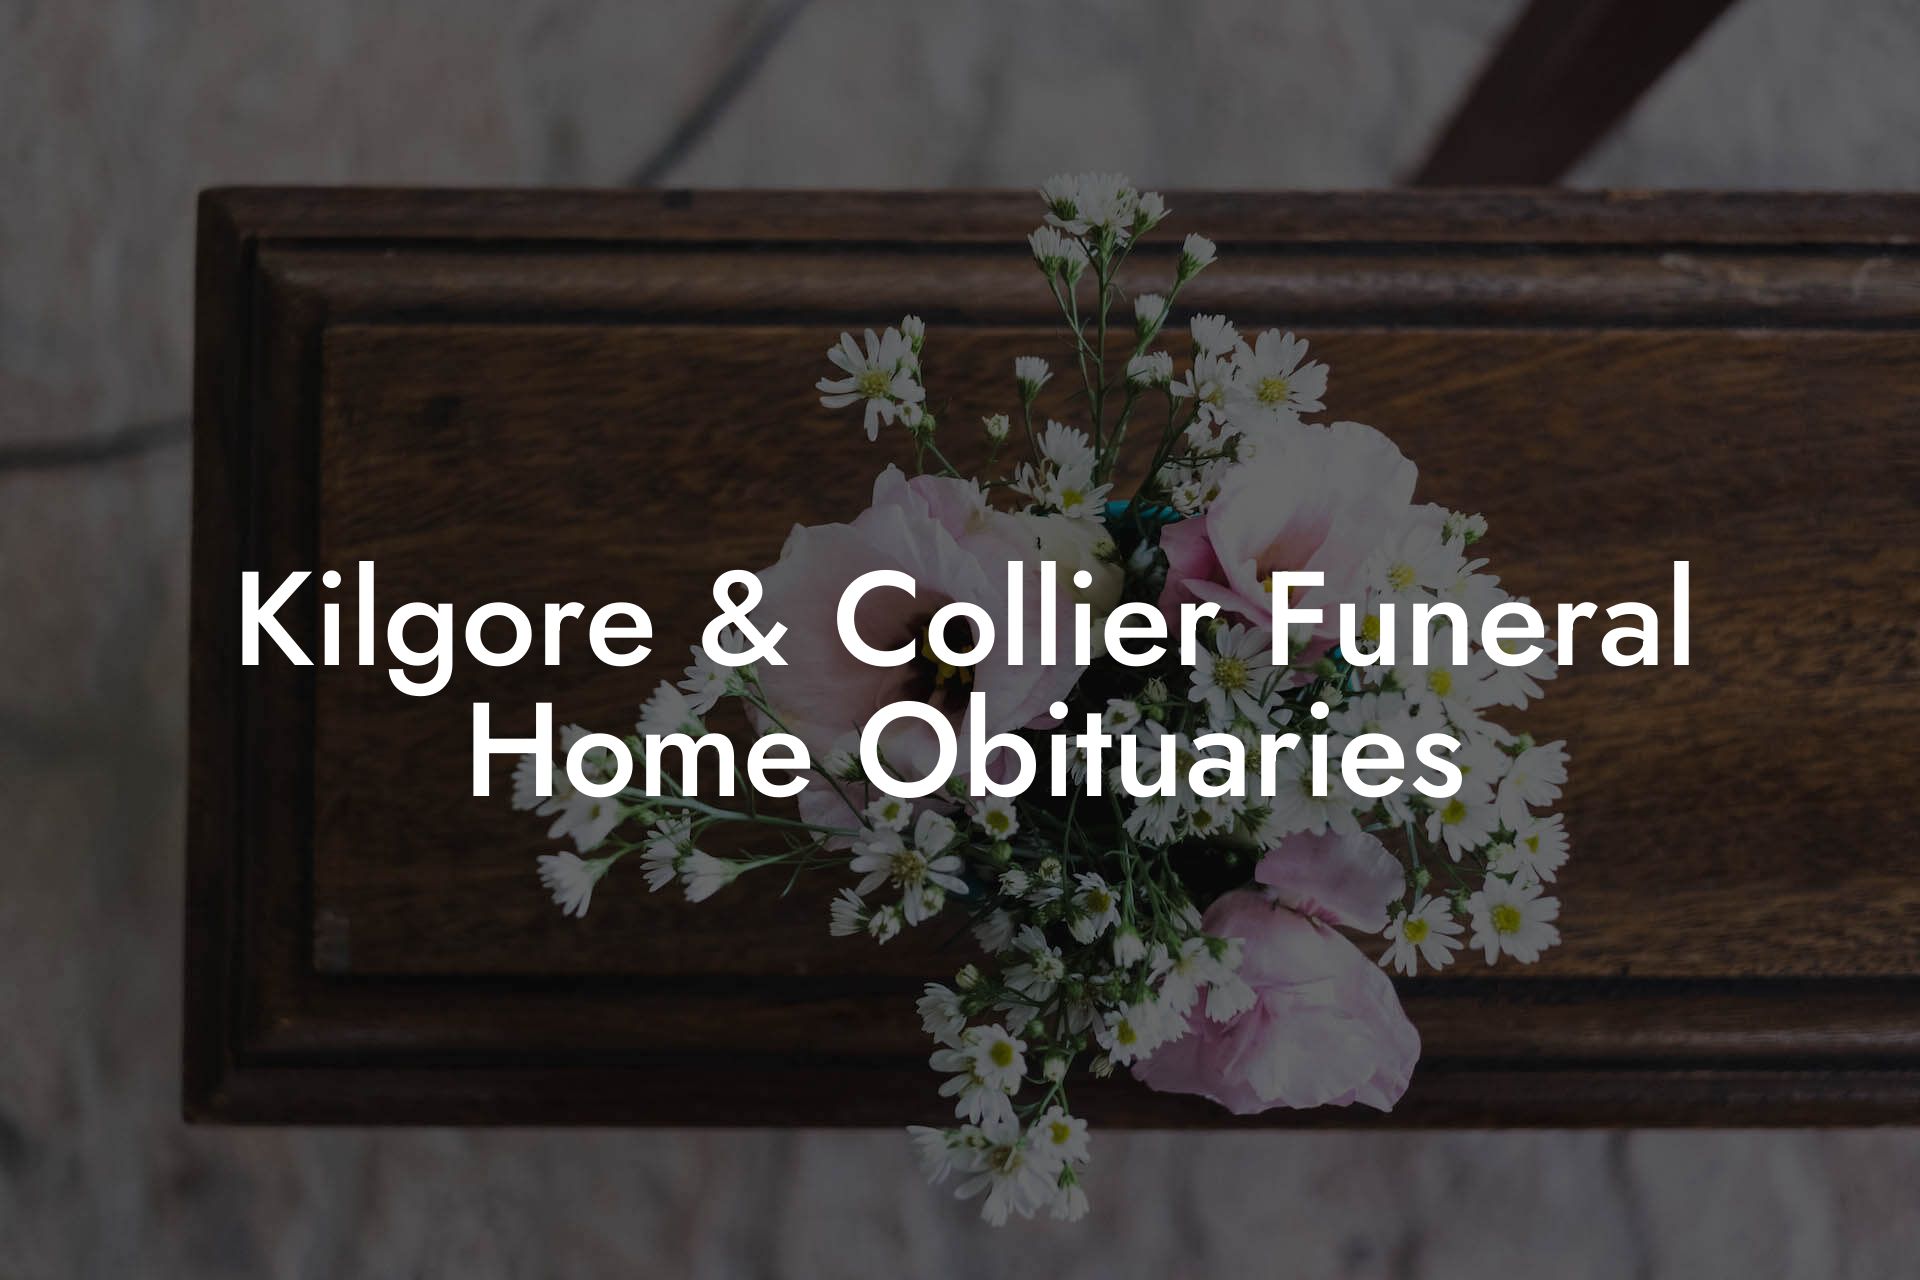 Kilgore & Collier Funeral Home Obituaries